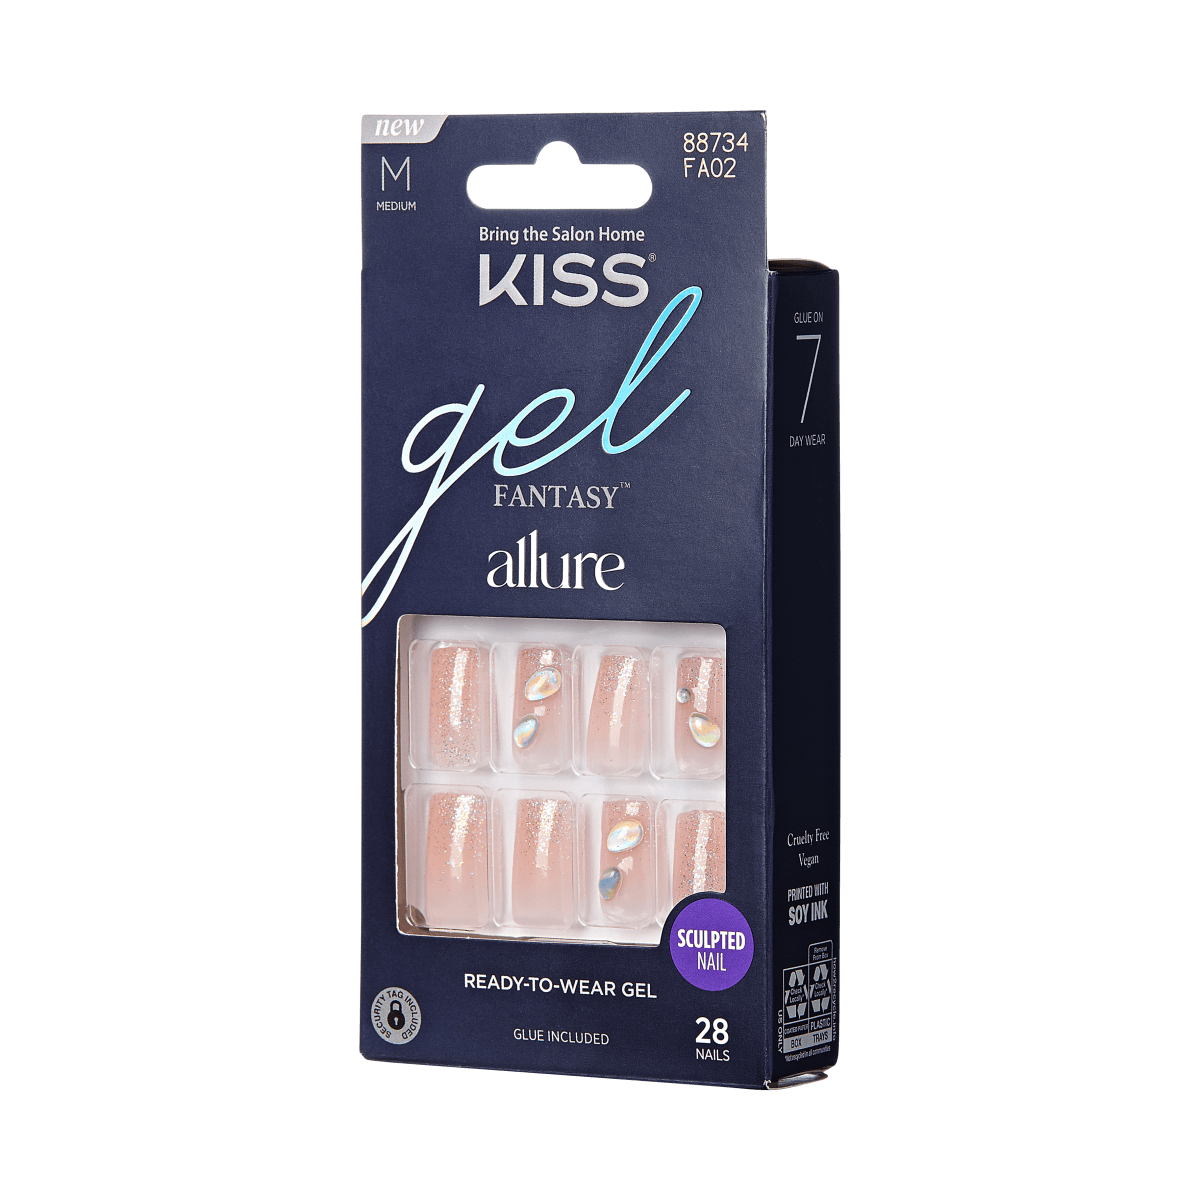 KISS Gel Fantasy Allure - Transformation